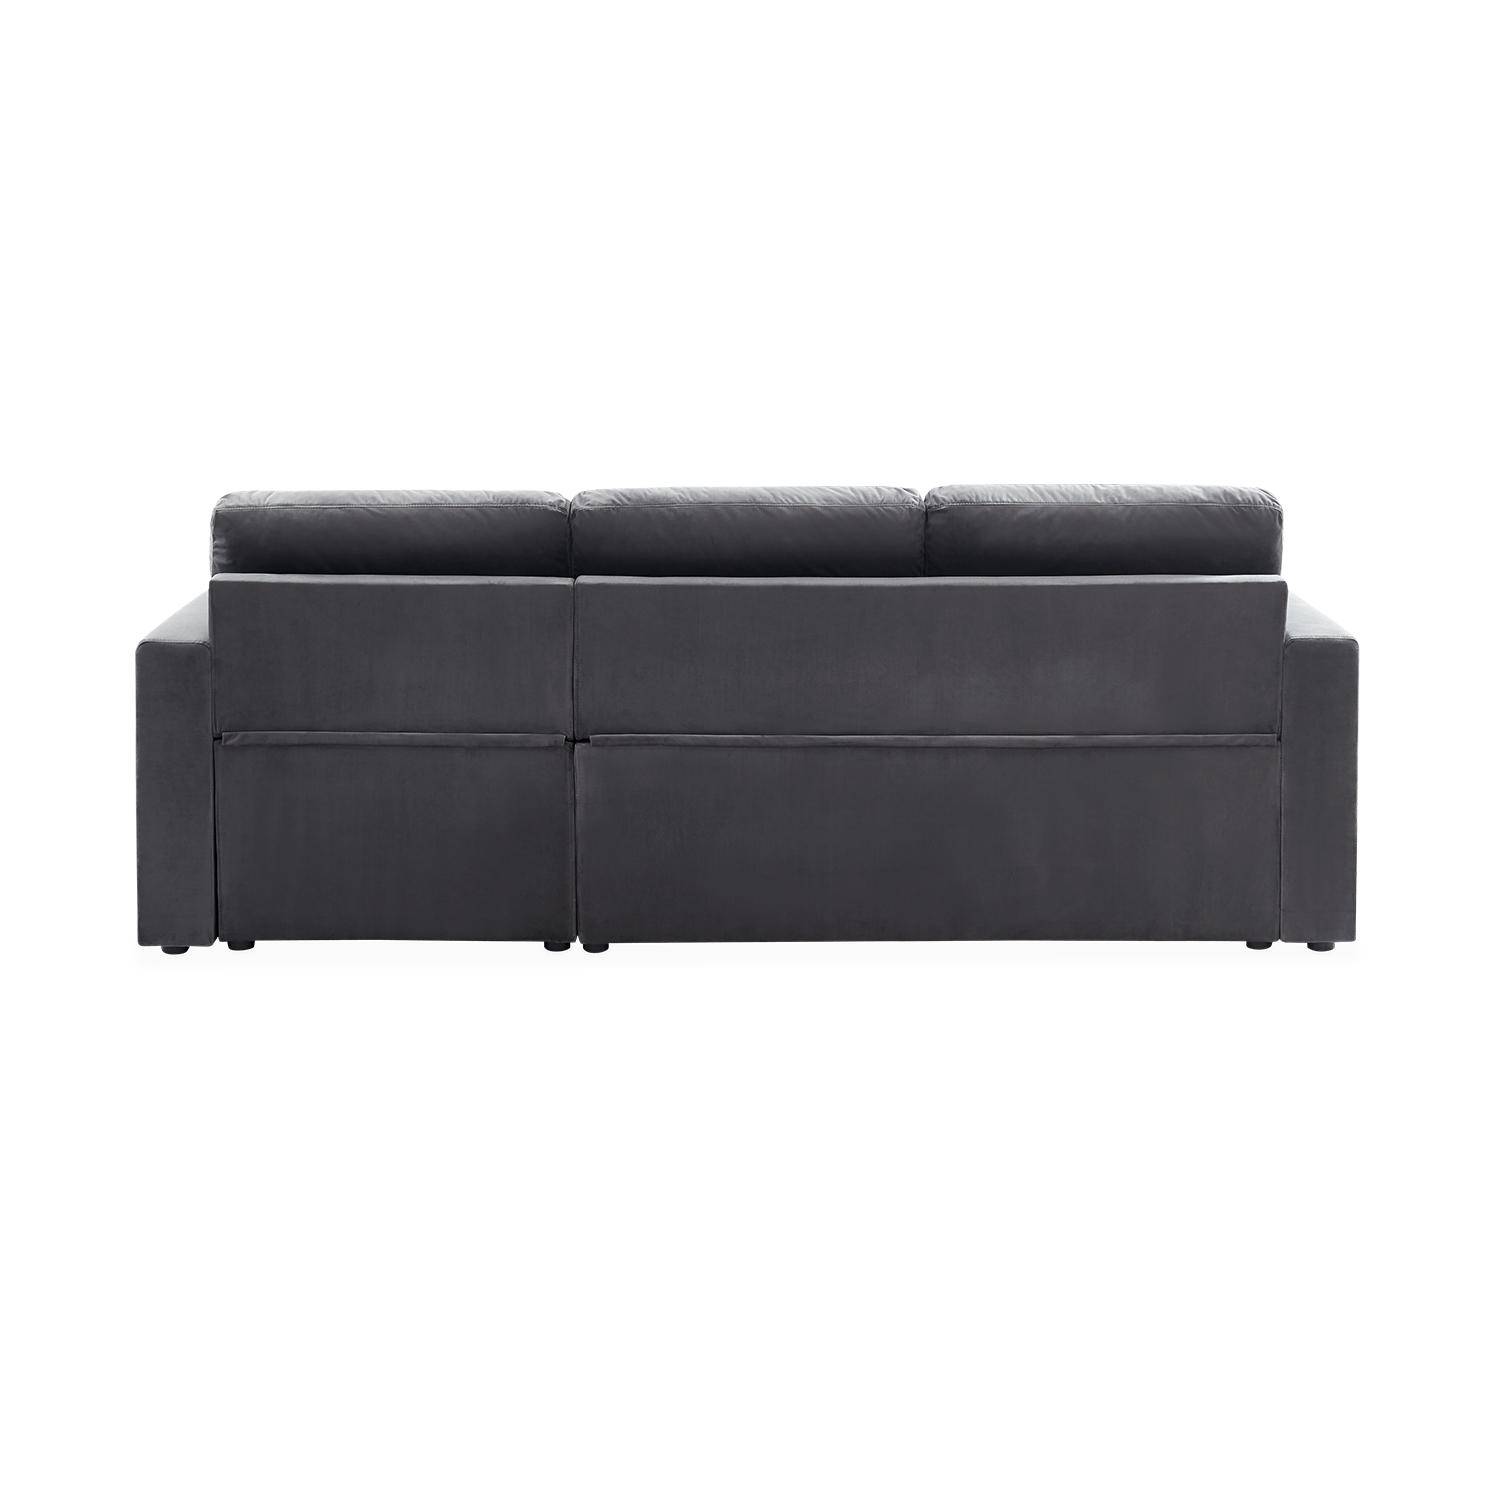 Dark grey velvet 3-seater convertible corner sofa, reversible corner armchair, storage box, modular bed Photo7